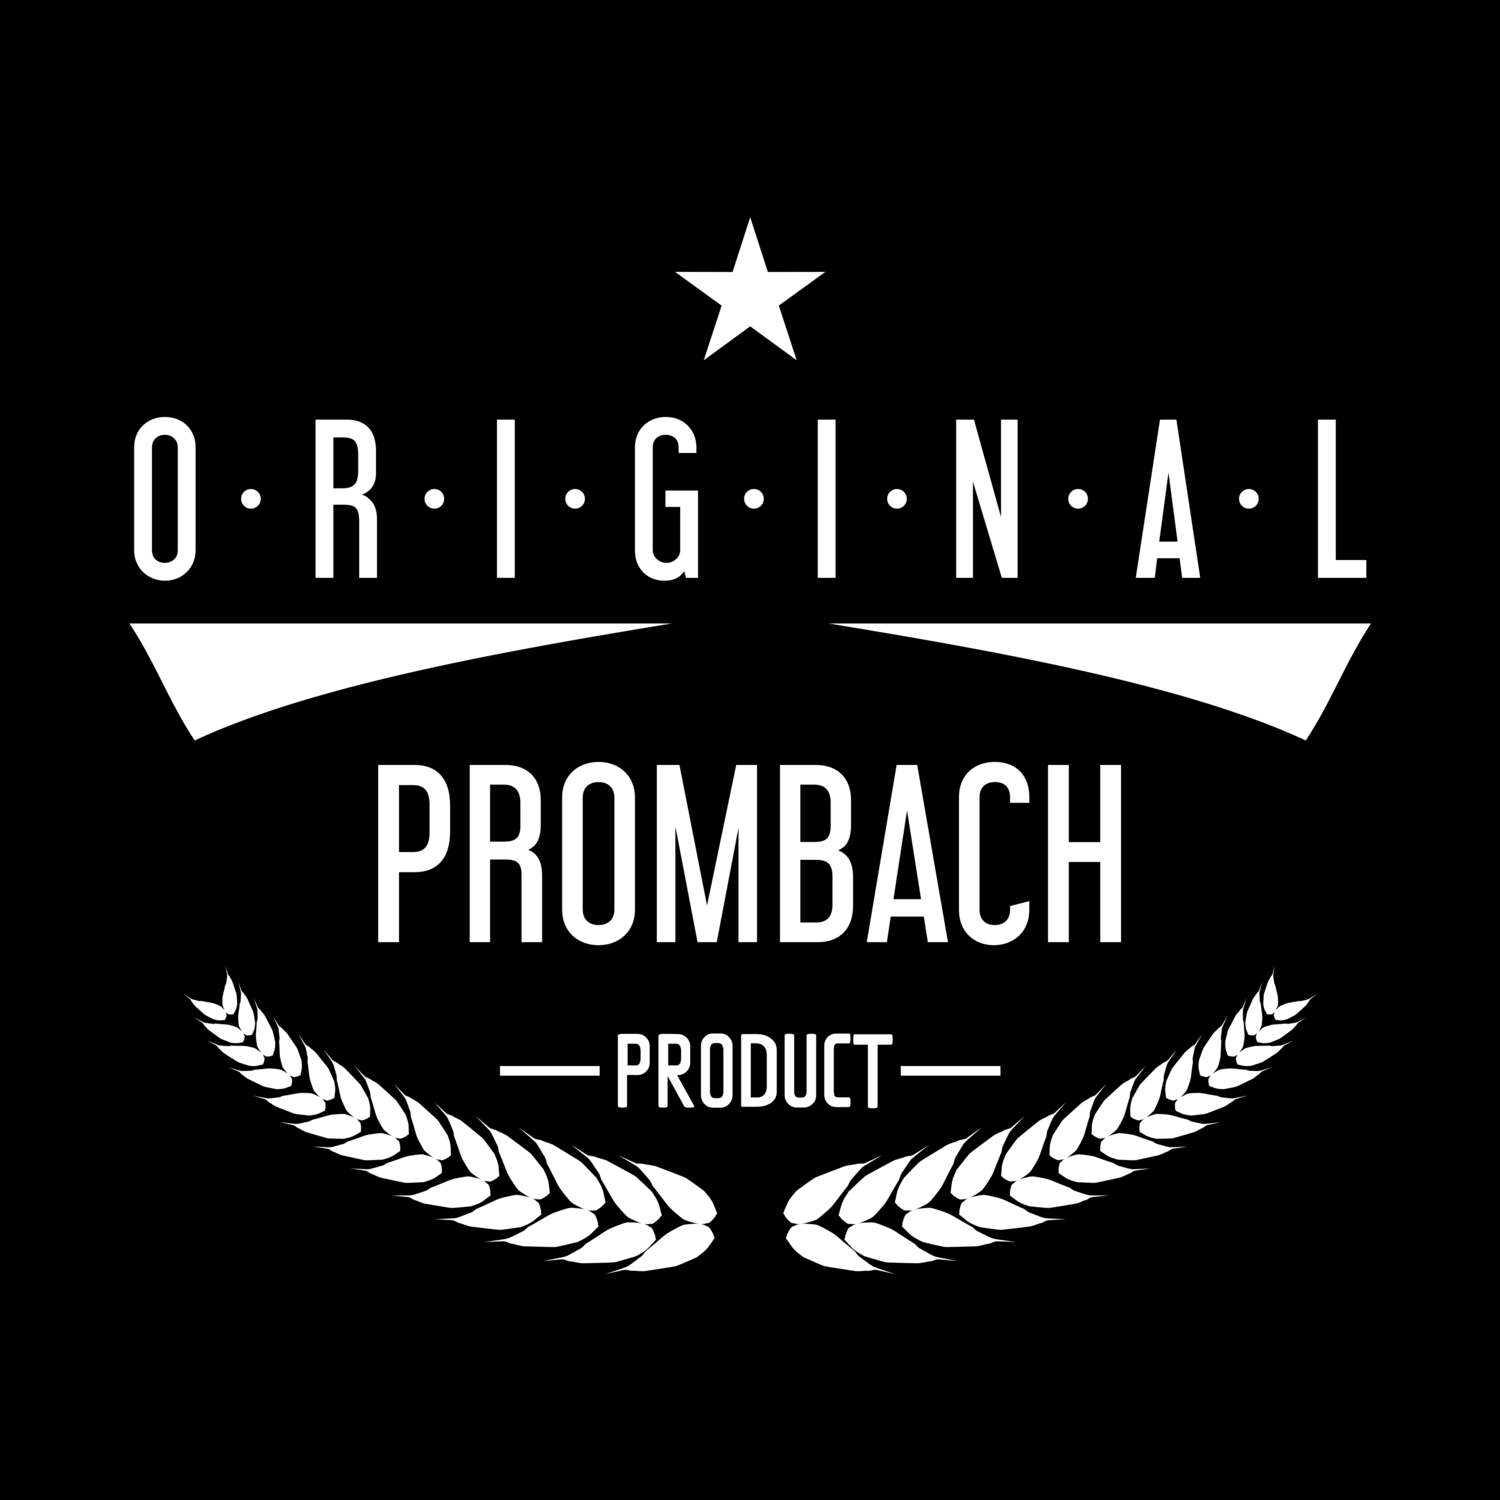 Prombach T-Shirt »Original Product«